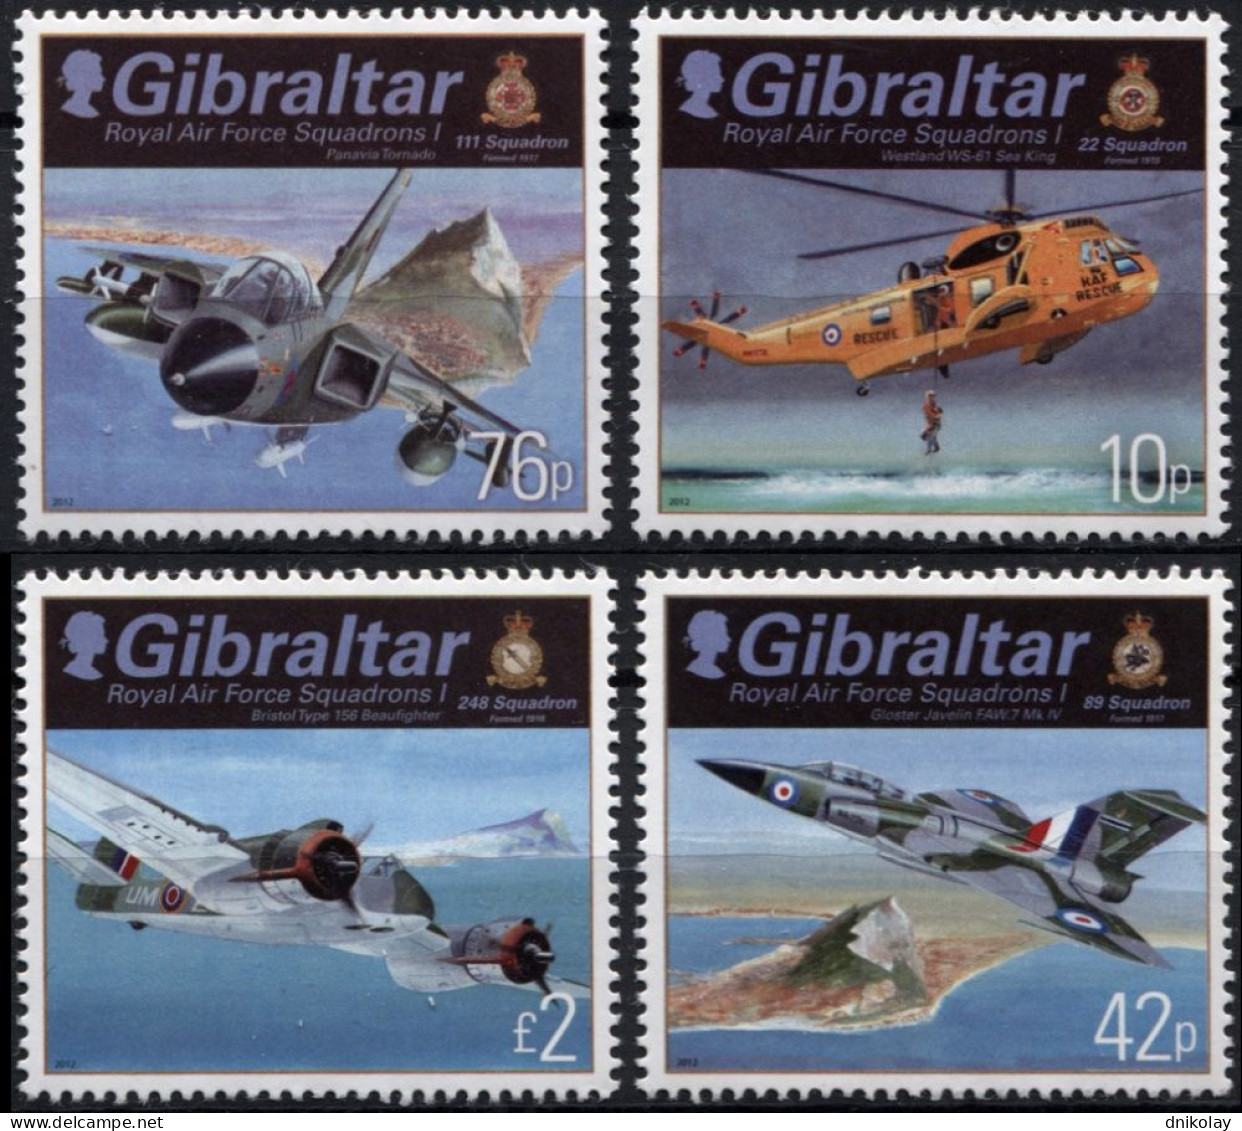 2012 1470 Gibraltar Royal Air Force Squadrons MNH - Gibraltar